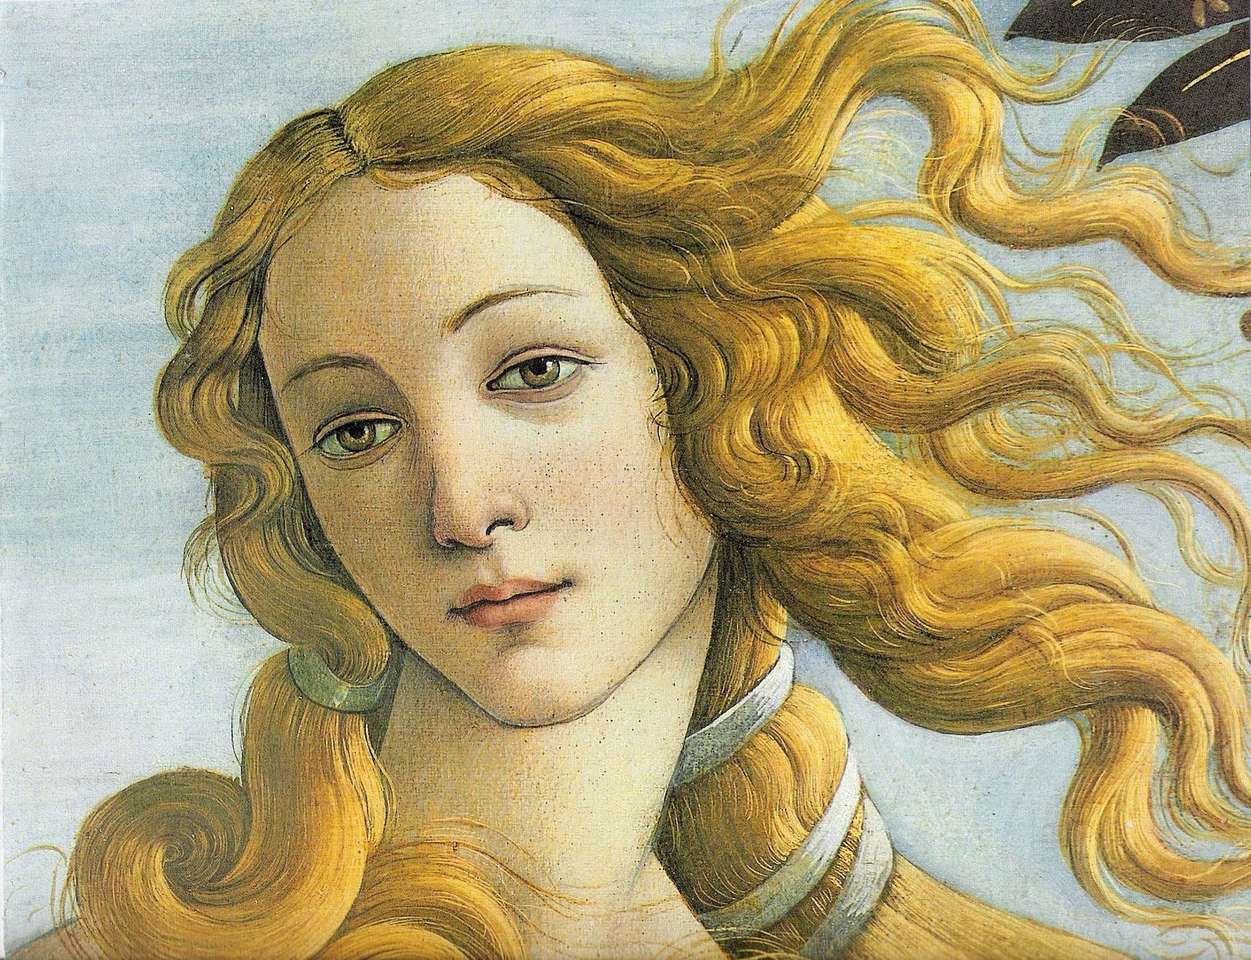 "O Nascimento de Vênus" por Sandro Botticelli puzzle online